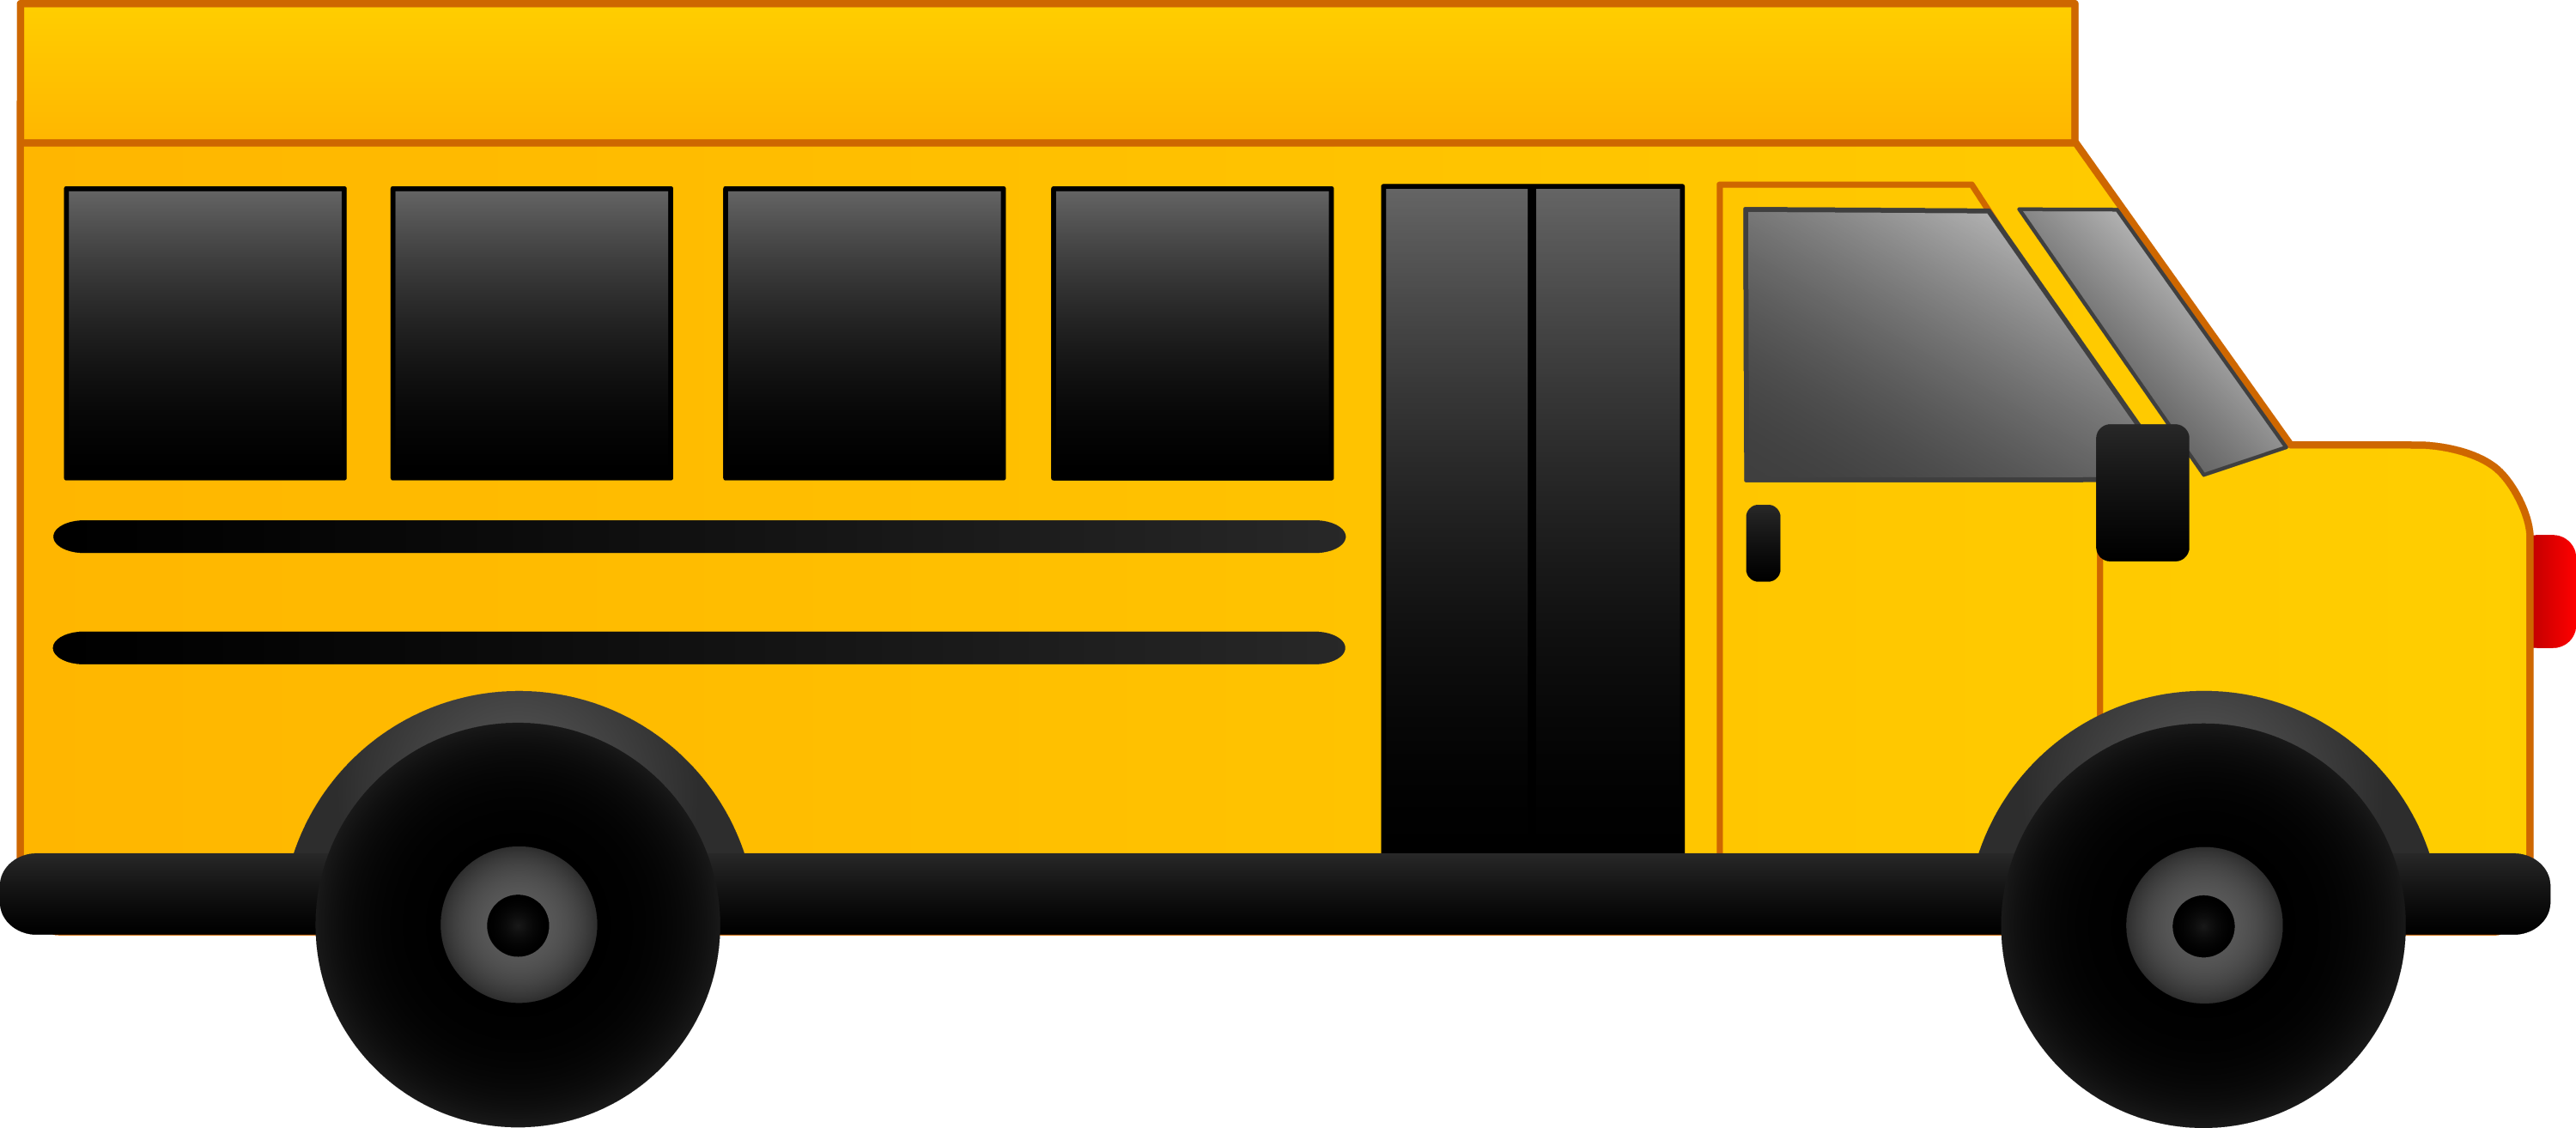 yellow bus clip art - photo #15